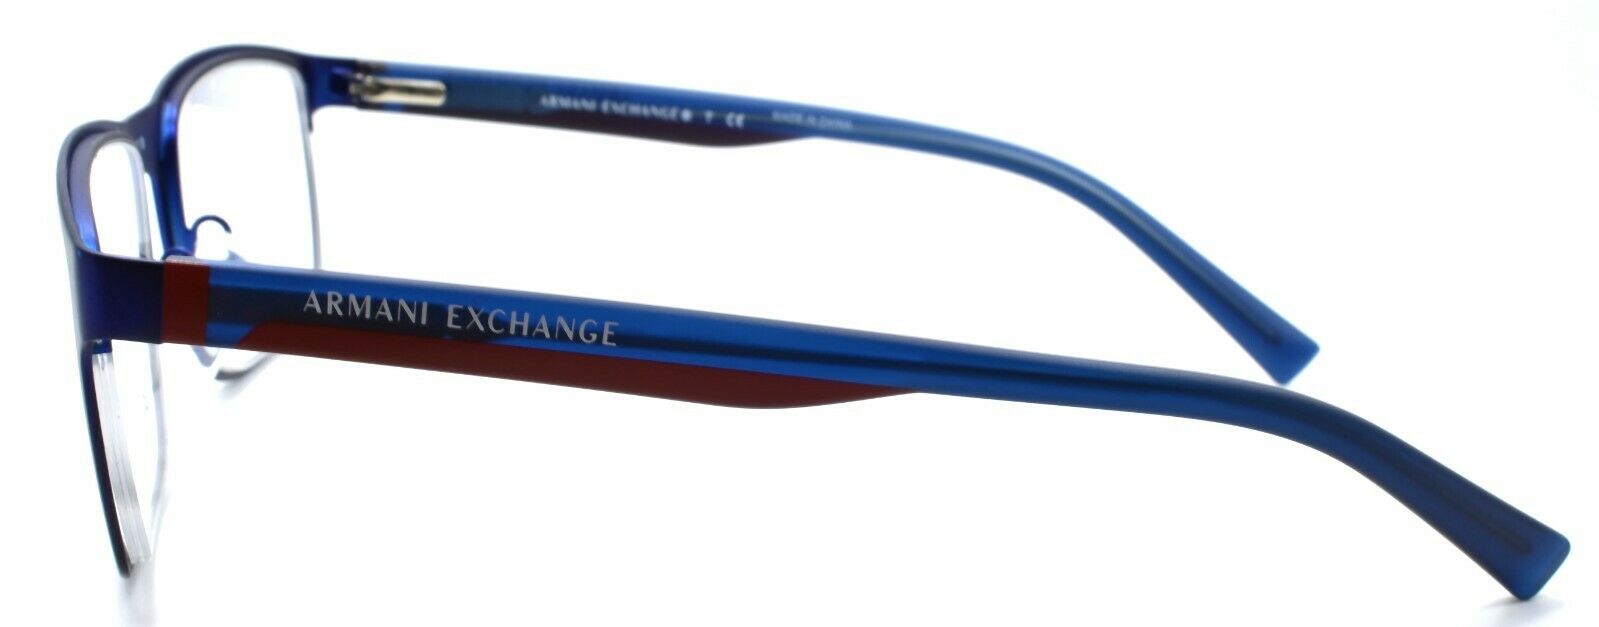 3-Armani Exchange AX1024 6099 Men's Eyeglasses Frames 54-18-140 Matte Blue-8053672749458-IKSpecs